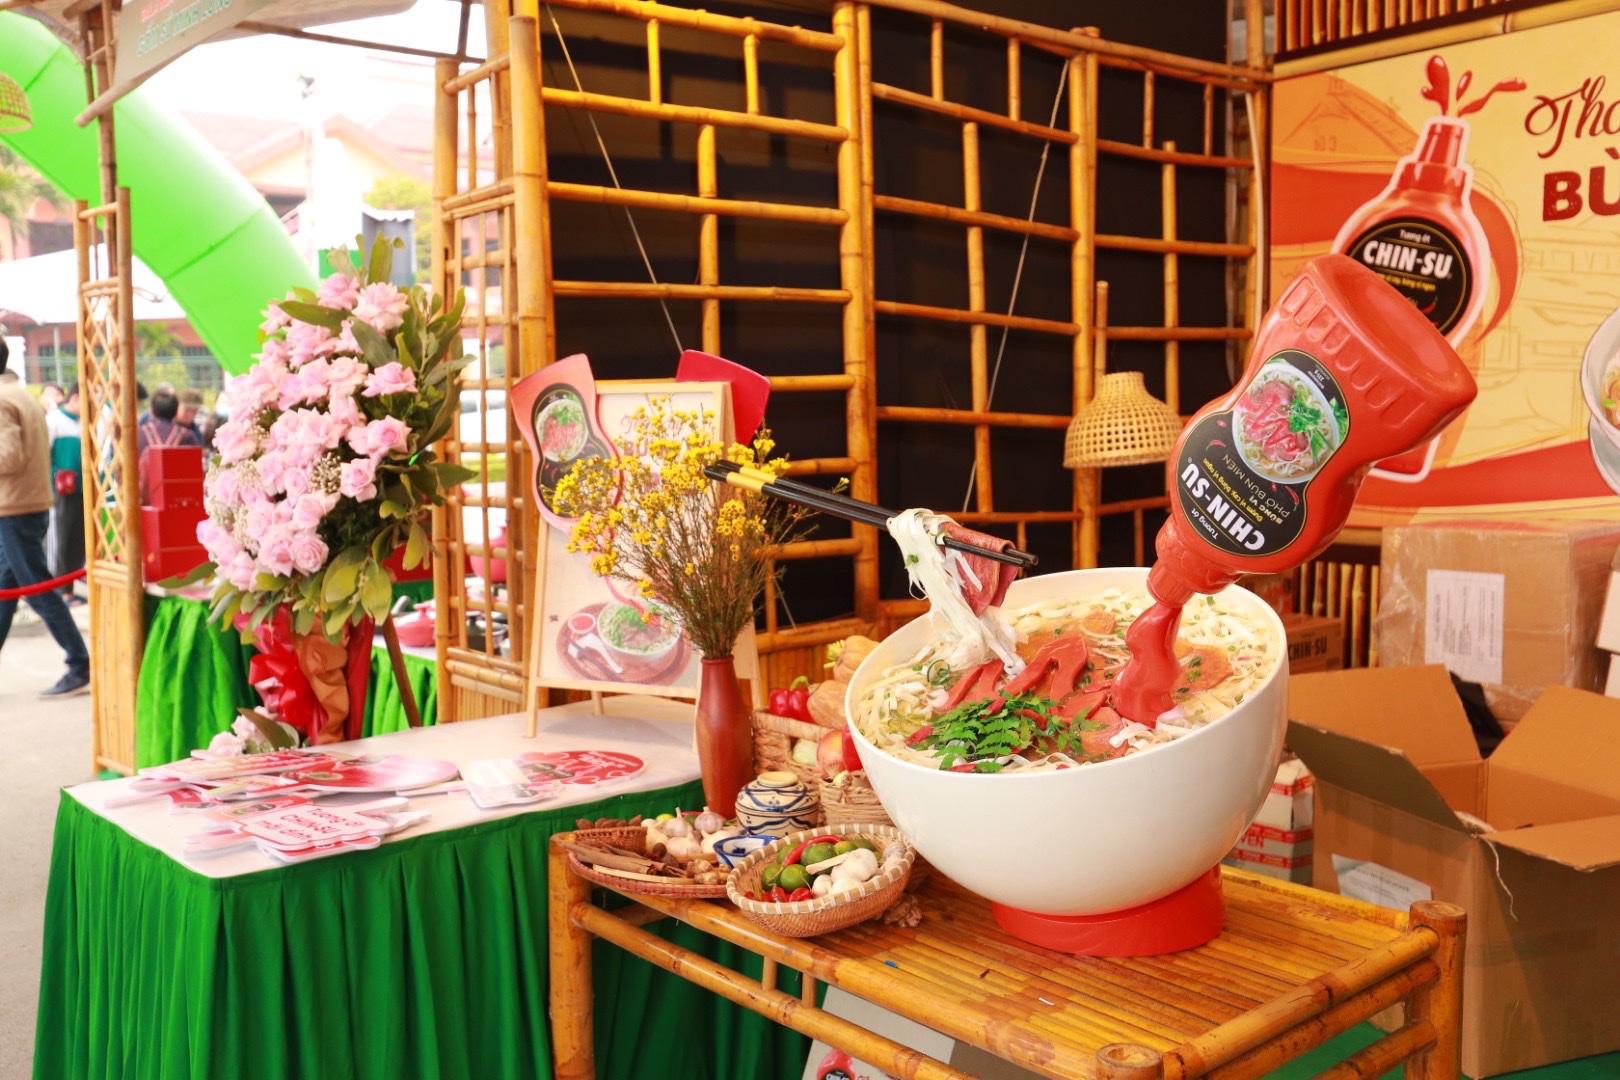 International and domestic food lovers enjoy pho with CHIN-SU chili sauce